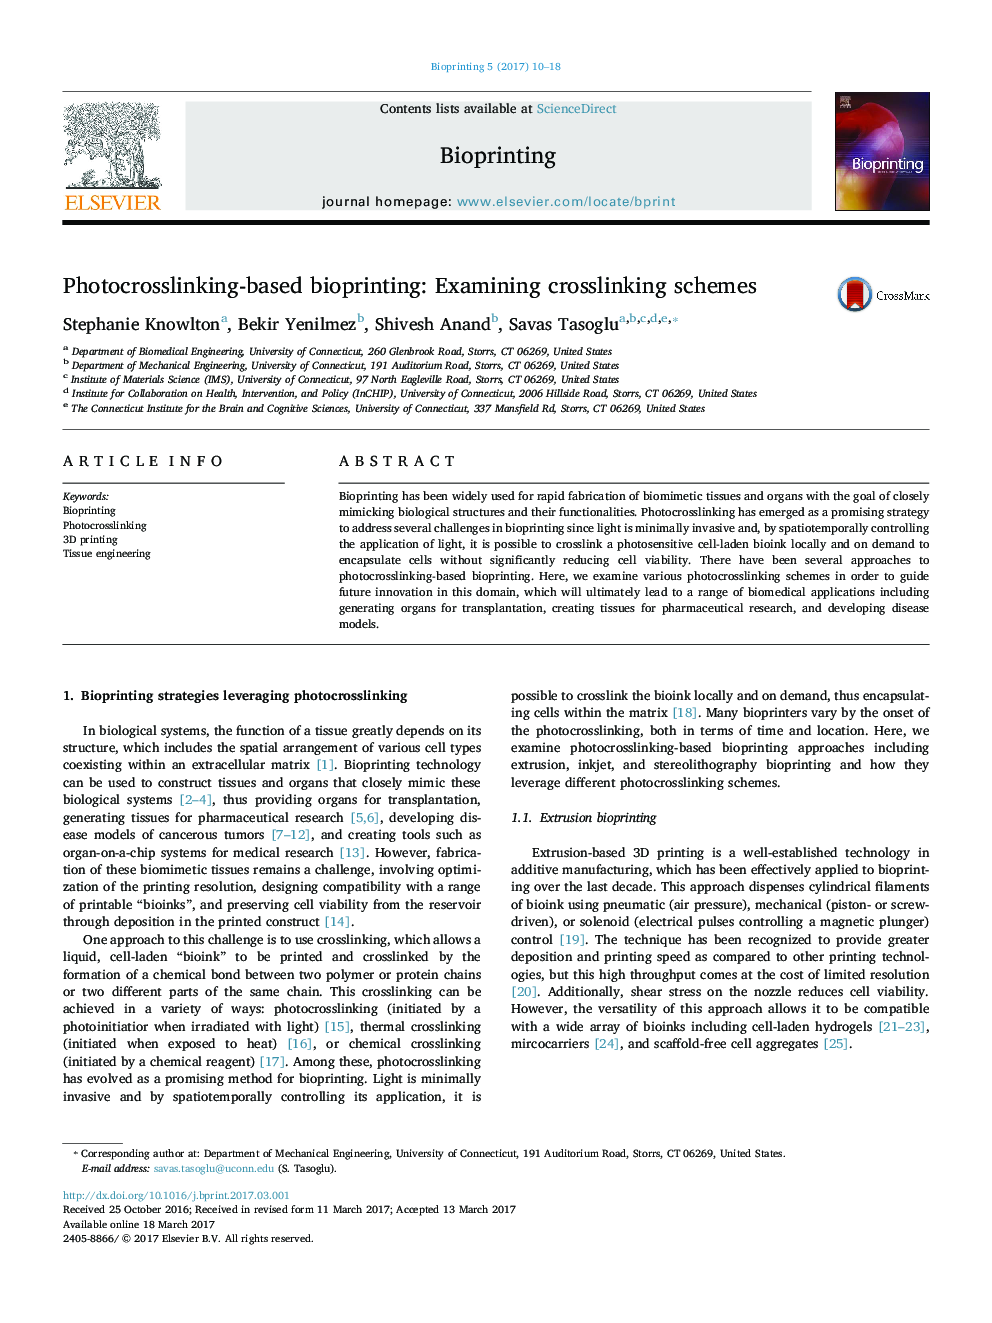 Photocrosslinking-based bioprinting: Examining crosslinking schemes